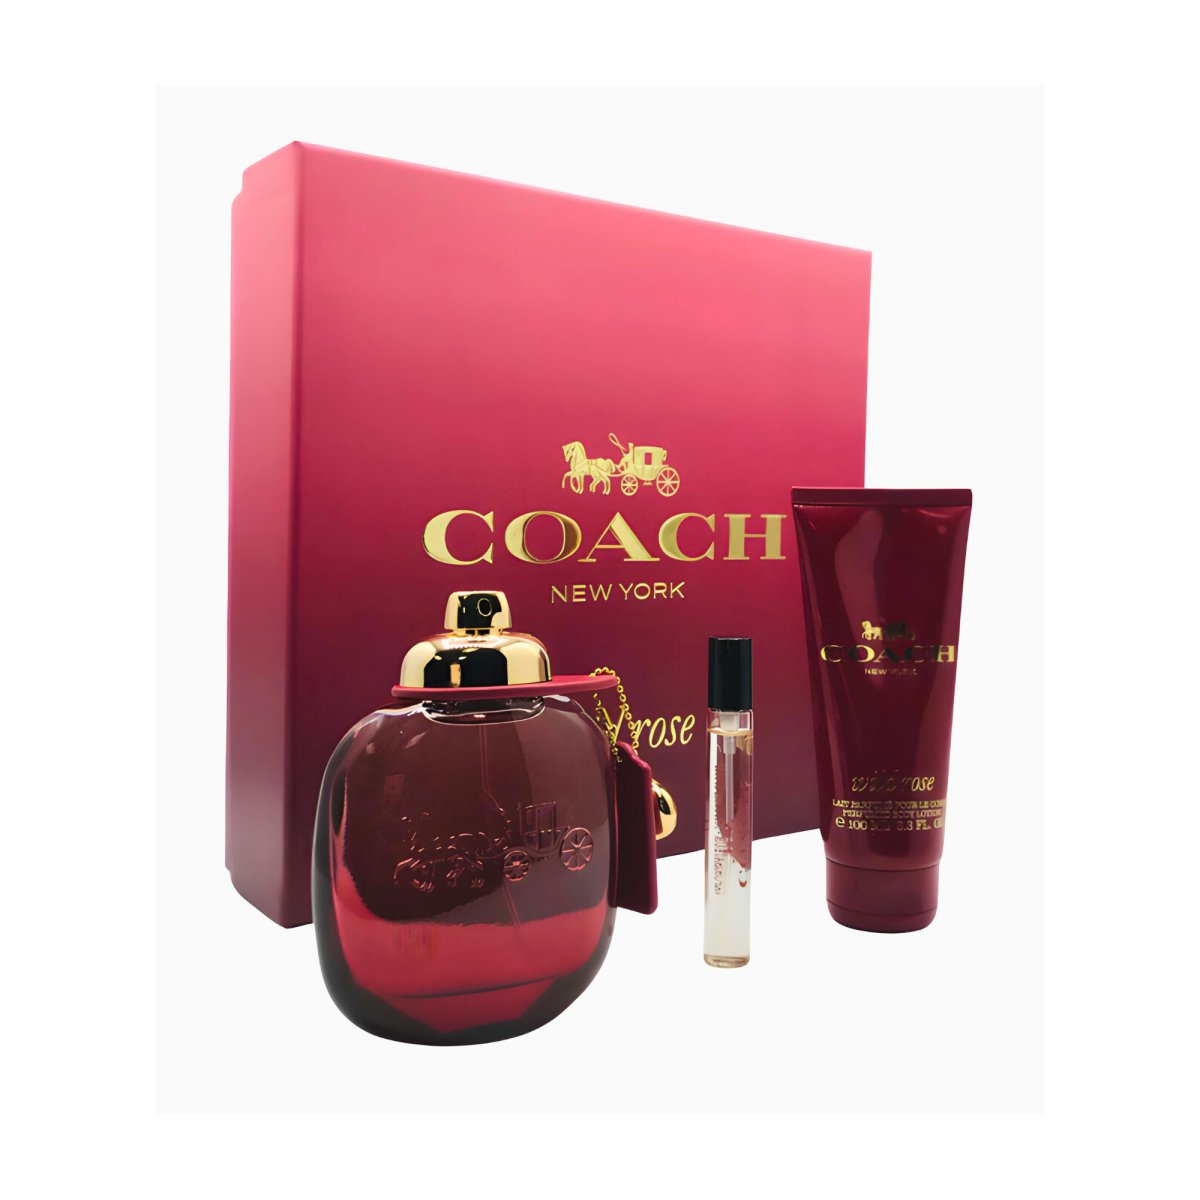 COACH Wild Rose 3pc Gift Set Fragrances for Ladies - Perfume Headquarters - Coach - 3386460138819 - Gift Set